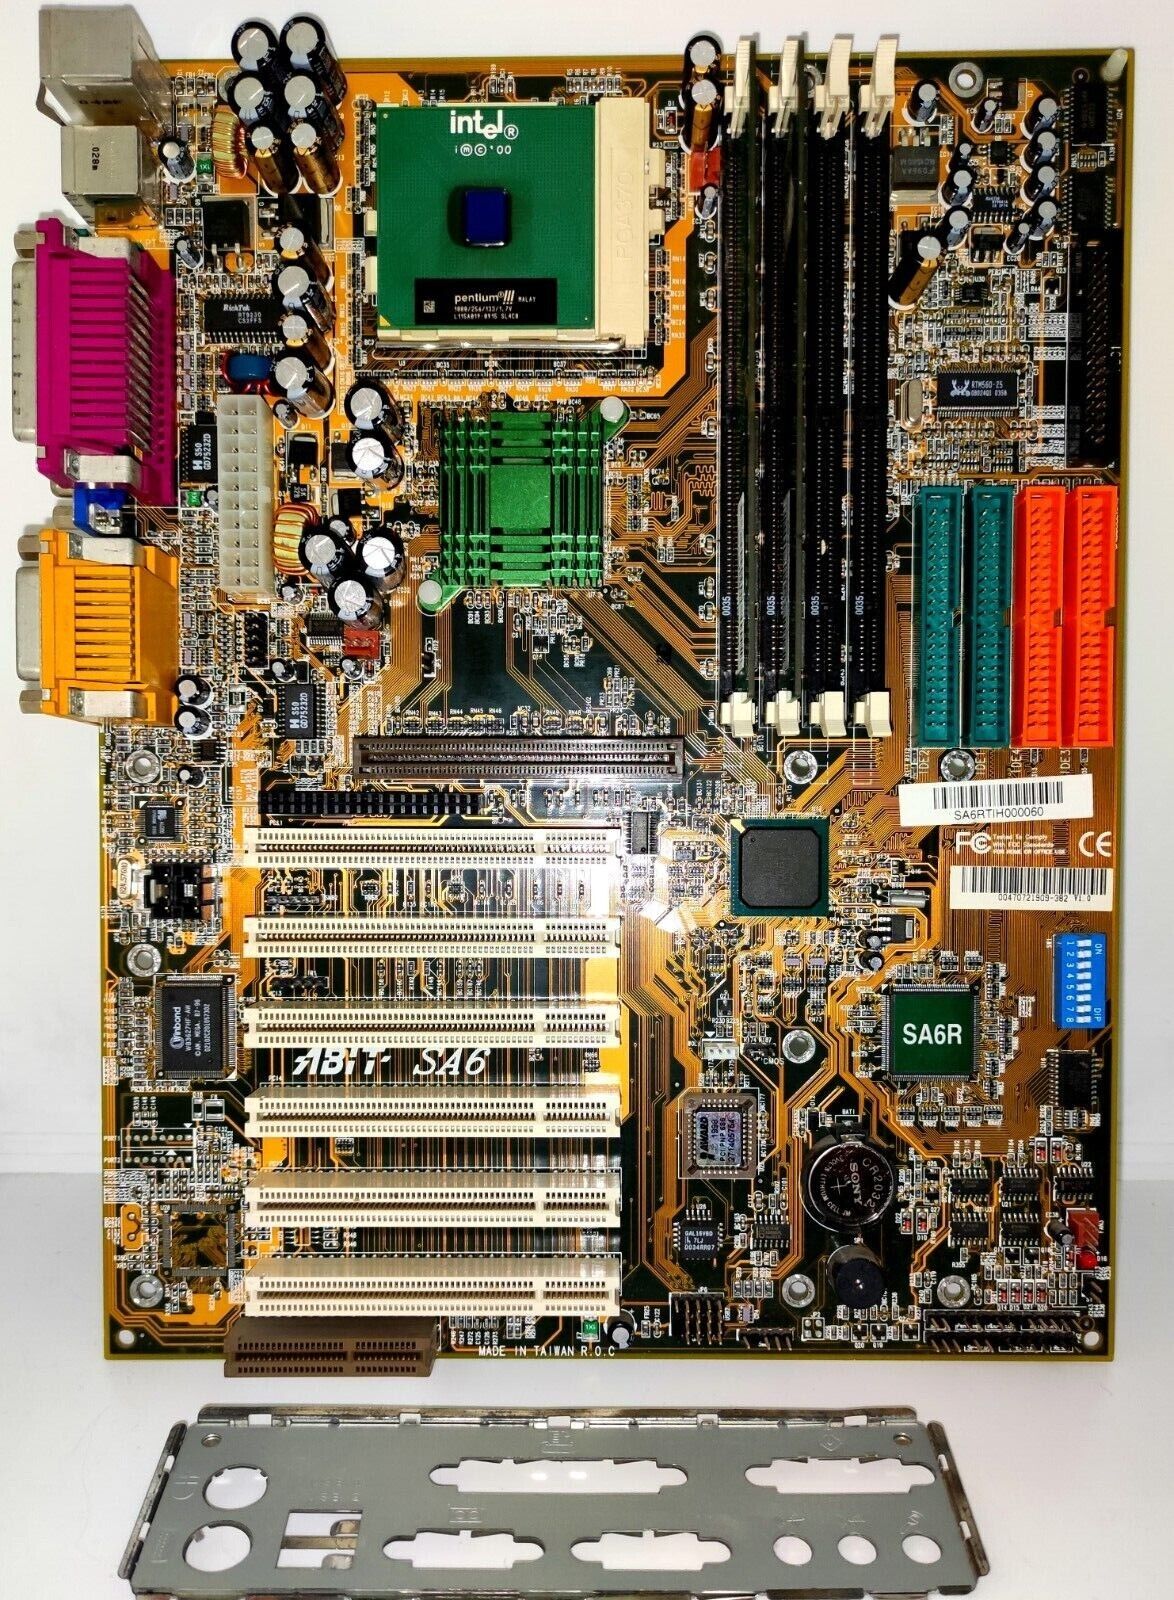 Motherboard Abit SA6 V1.0 i815EP SOC.370 IDE RAID/Pentium3-1000/Ram 256mb